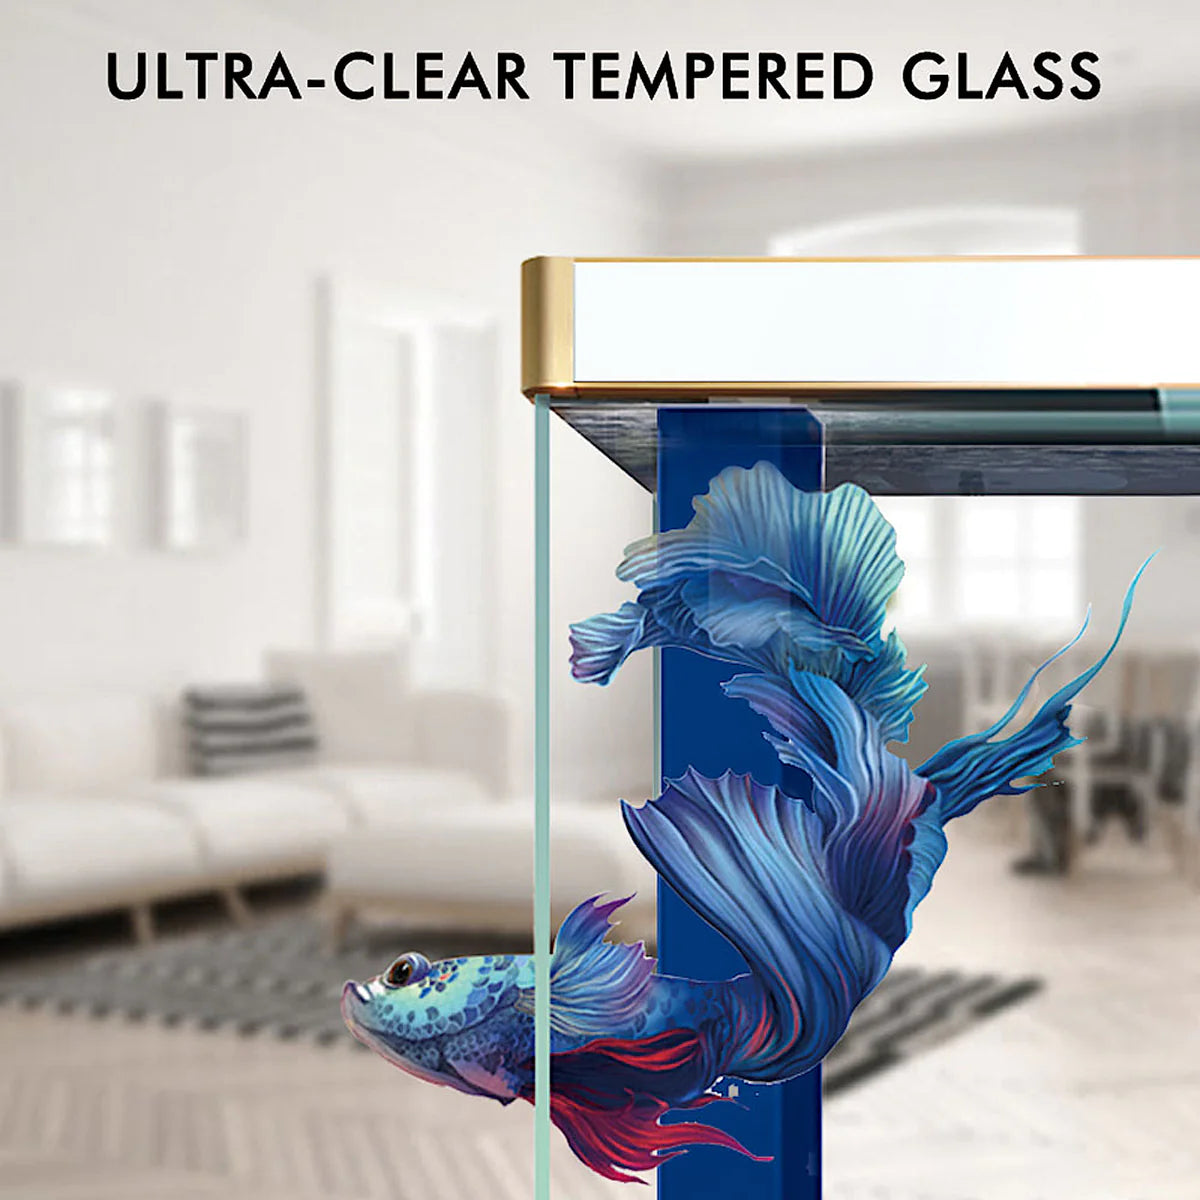 Aqua Dream 100 Gallon Tempered Glass Aquarium Red and Gold AD-1060-RD - Serenity Provision